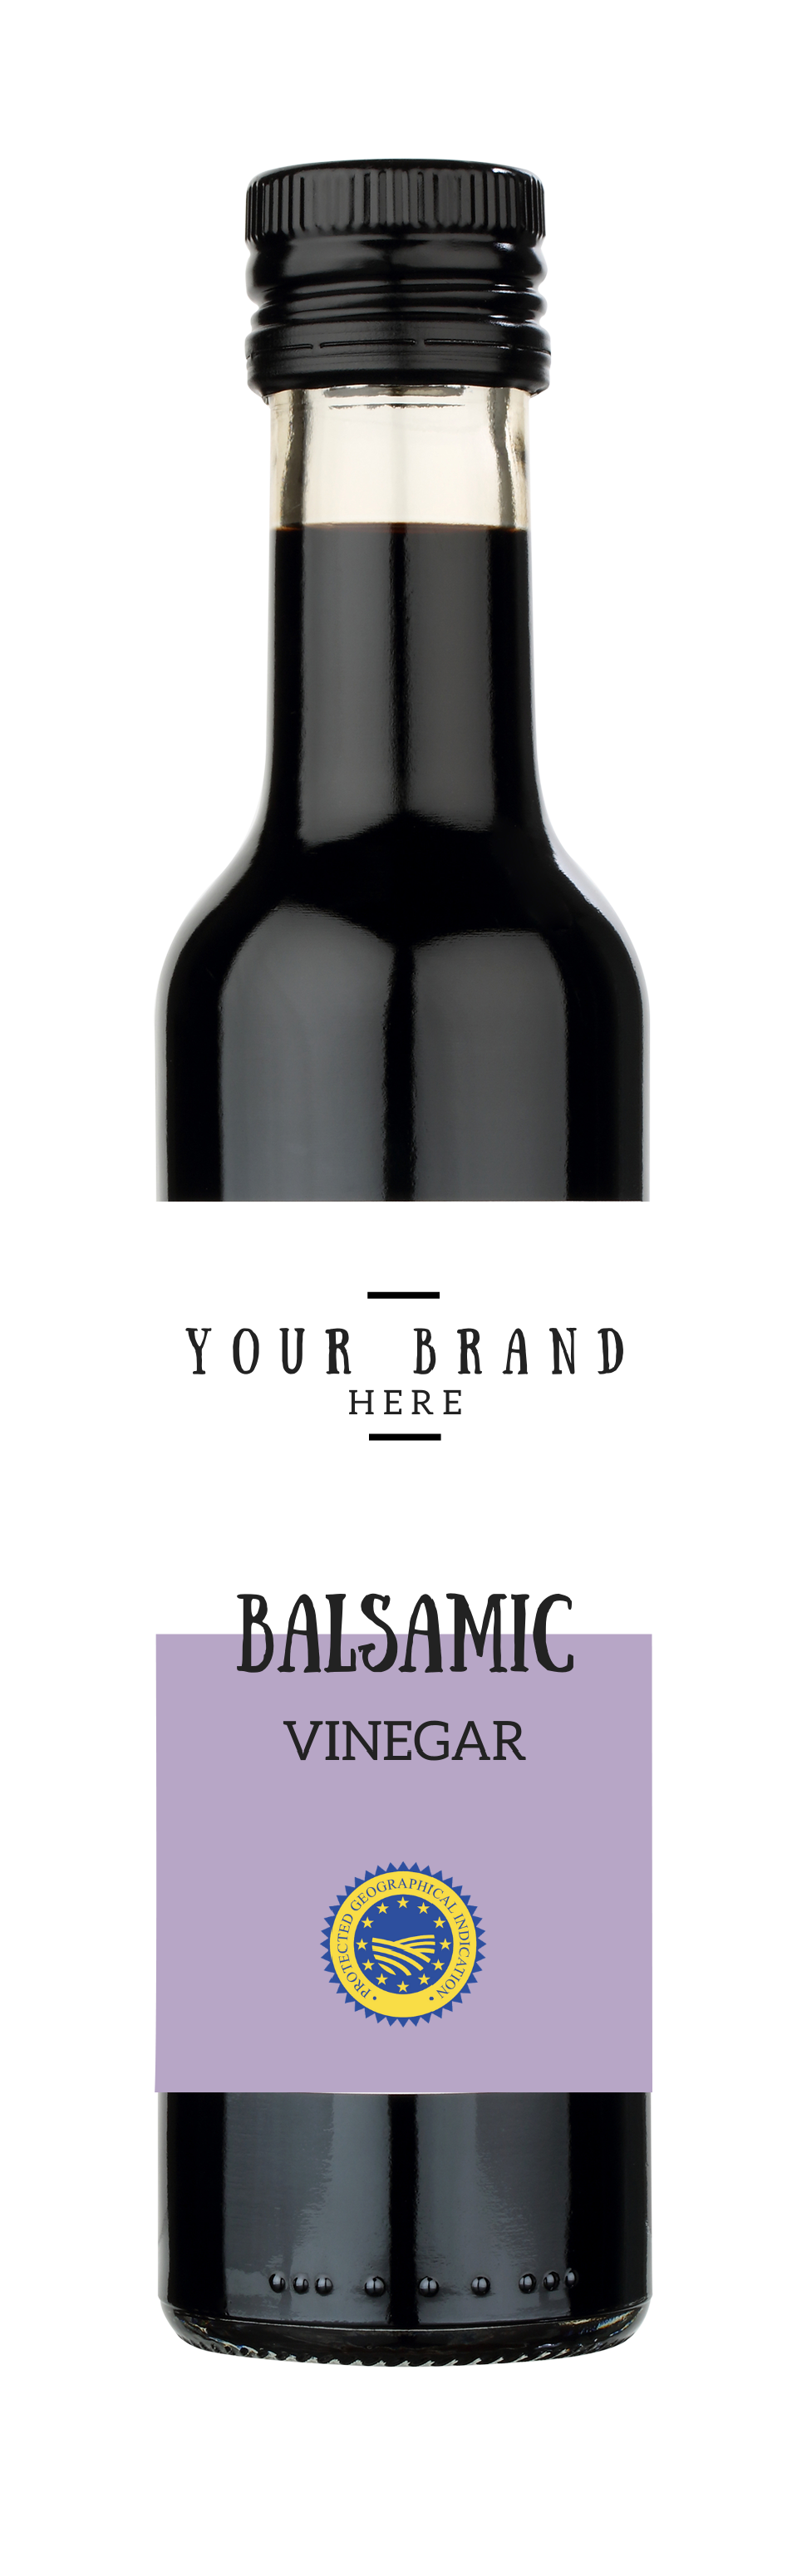 Balsamic Vinegar from Modena 6%